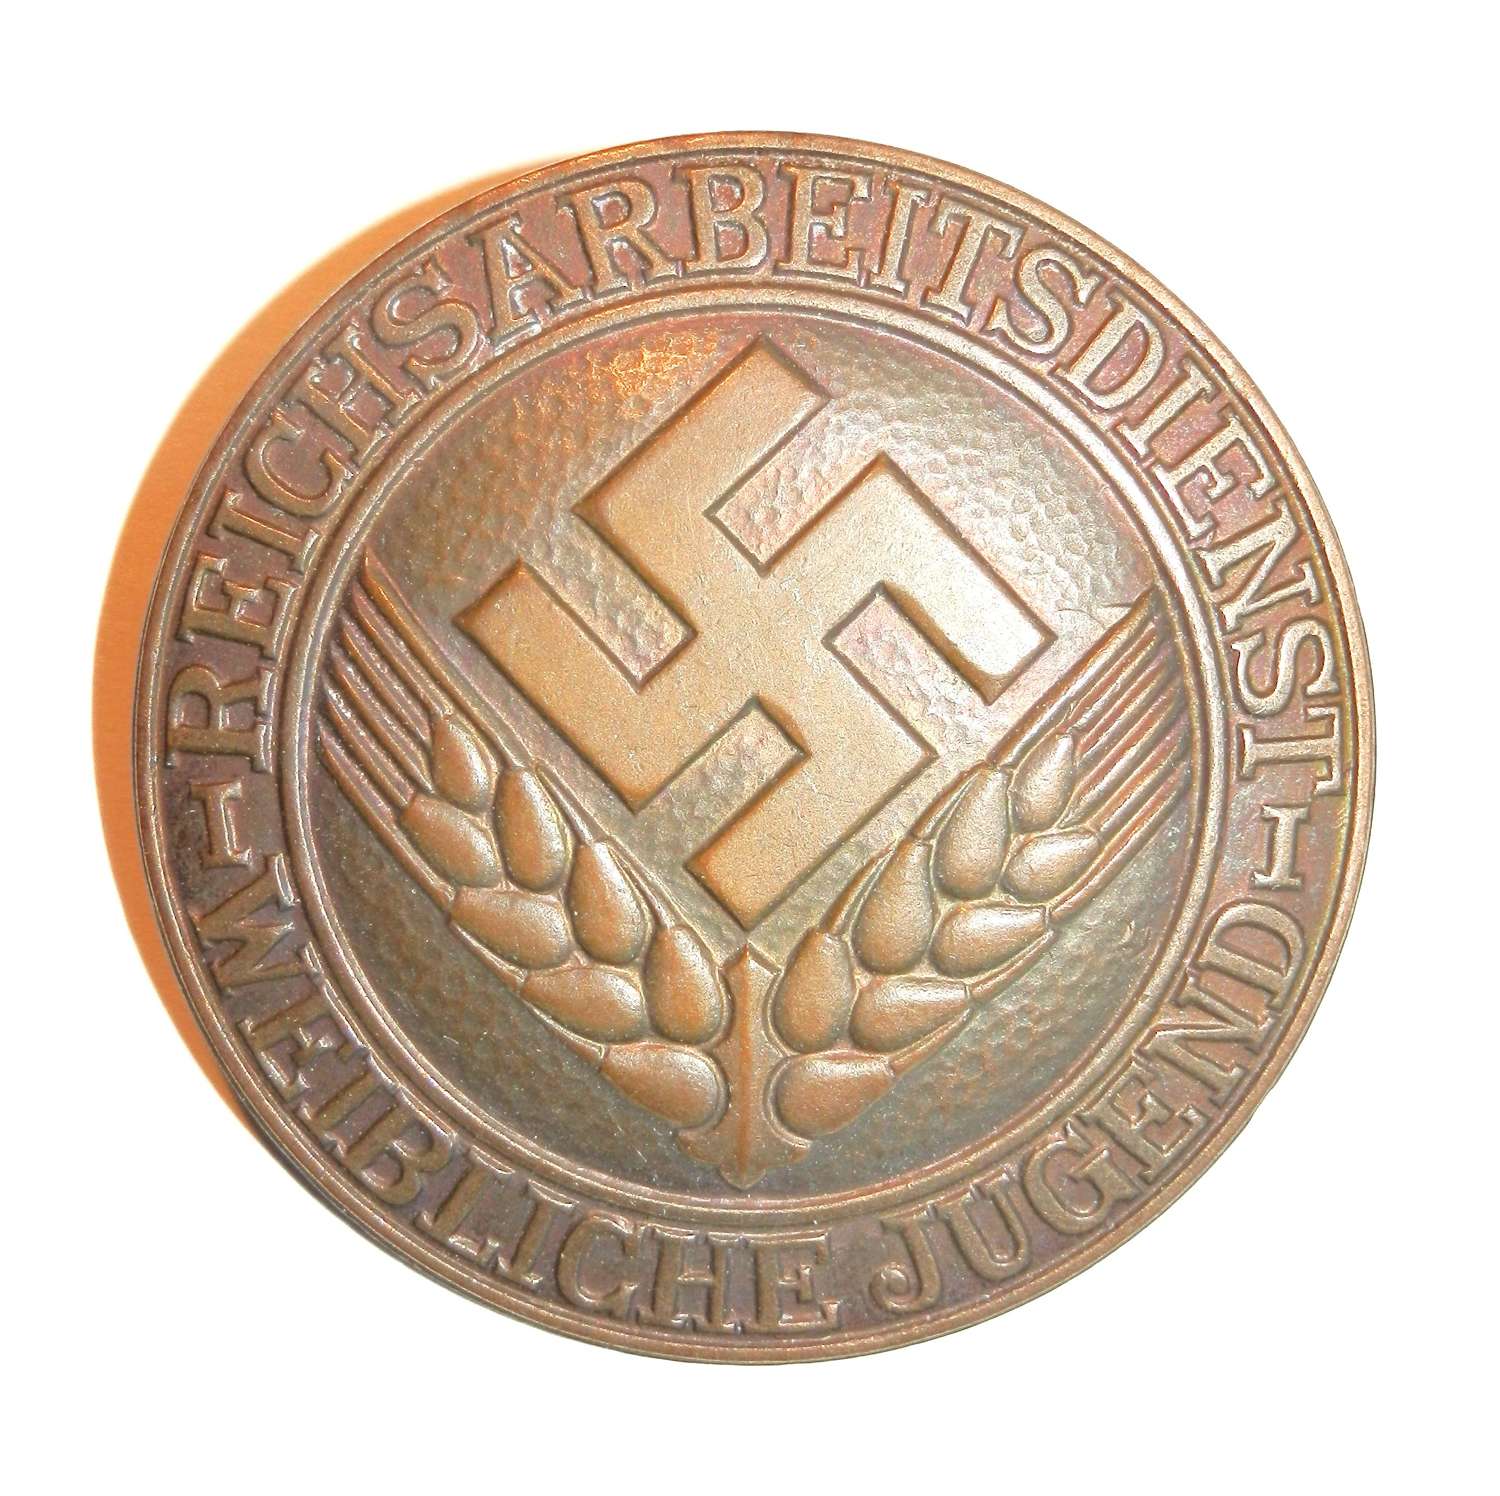 RAD, Reichsarbeitsdienst Female Members Badge.